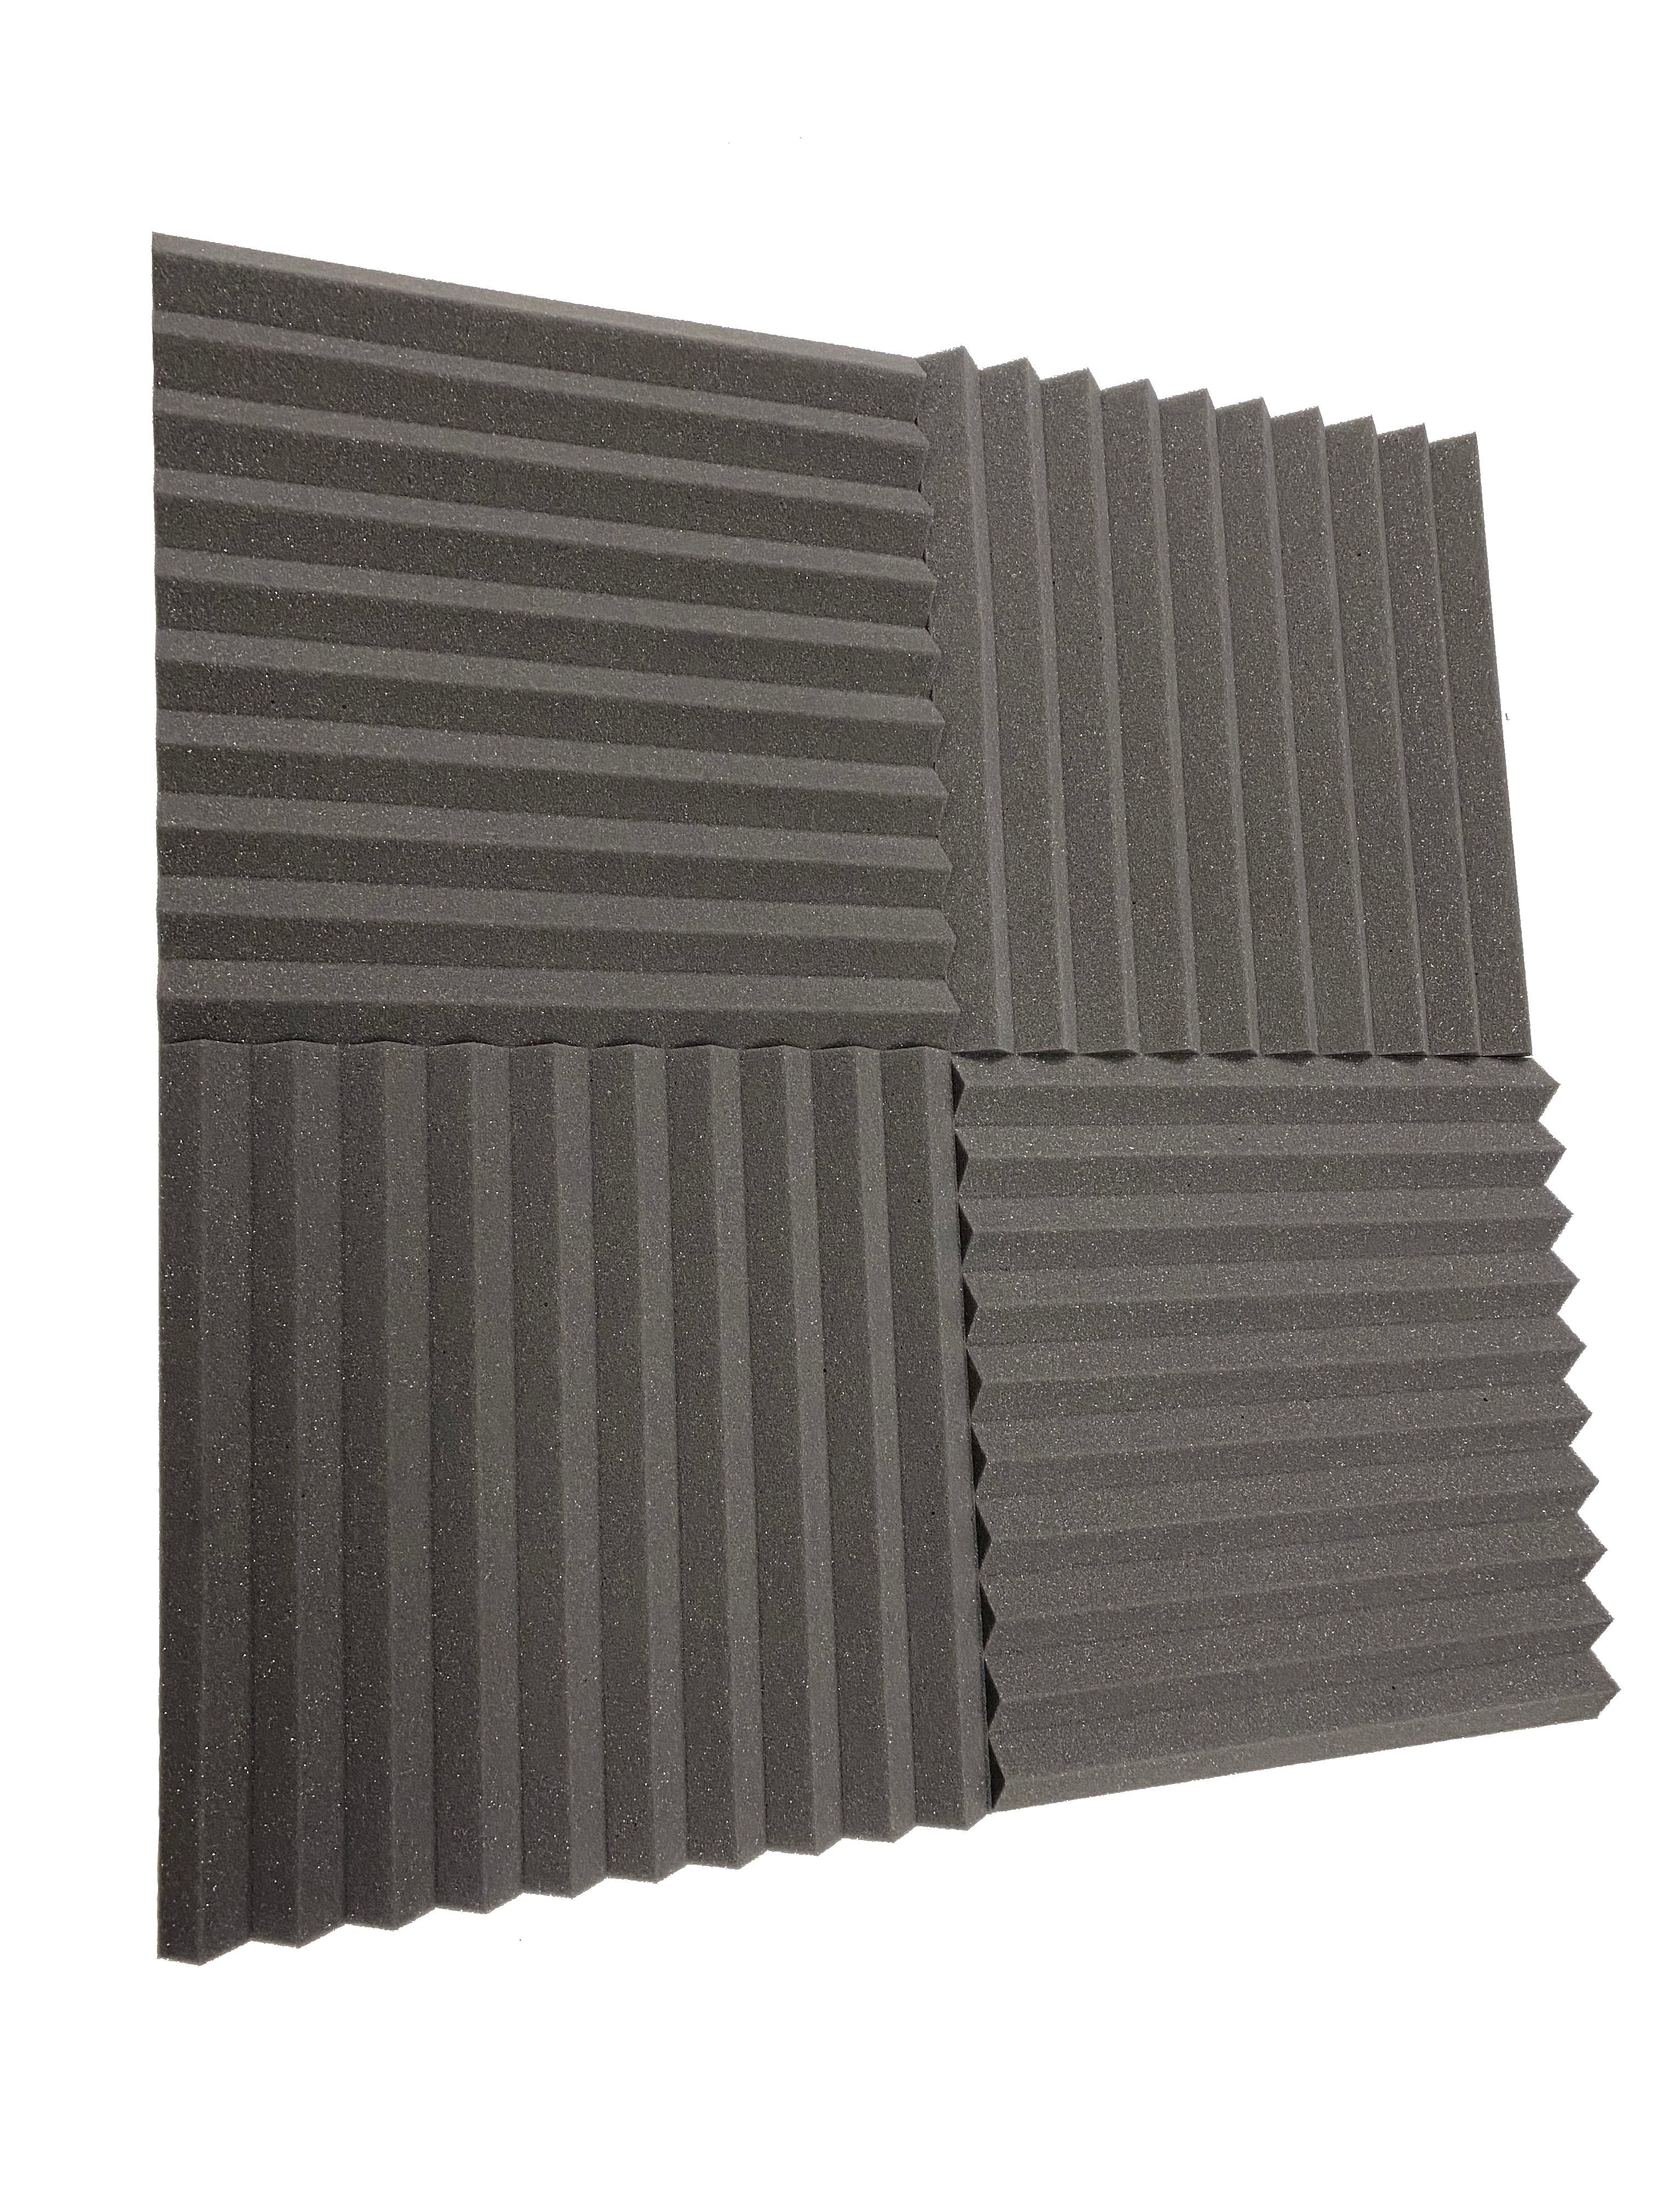 Wedge Combo Tile Kit Acoustic Studio Foam